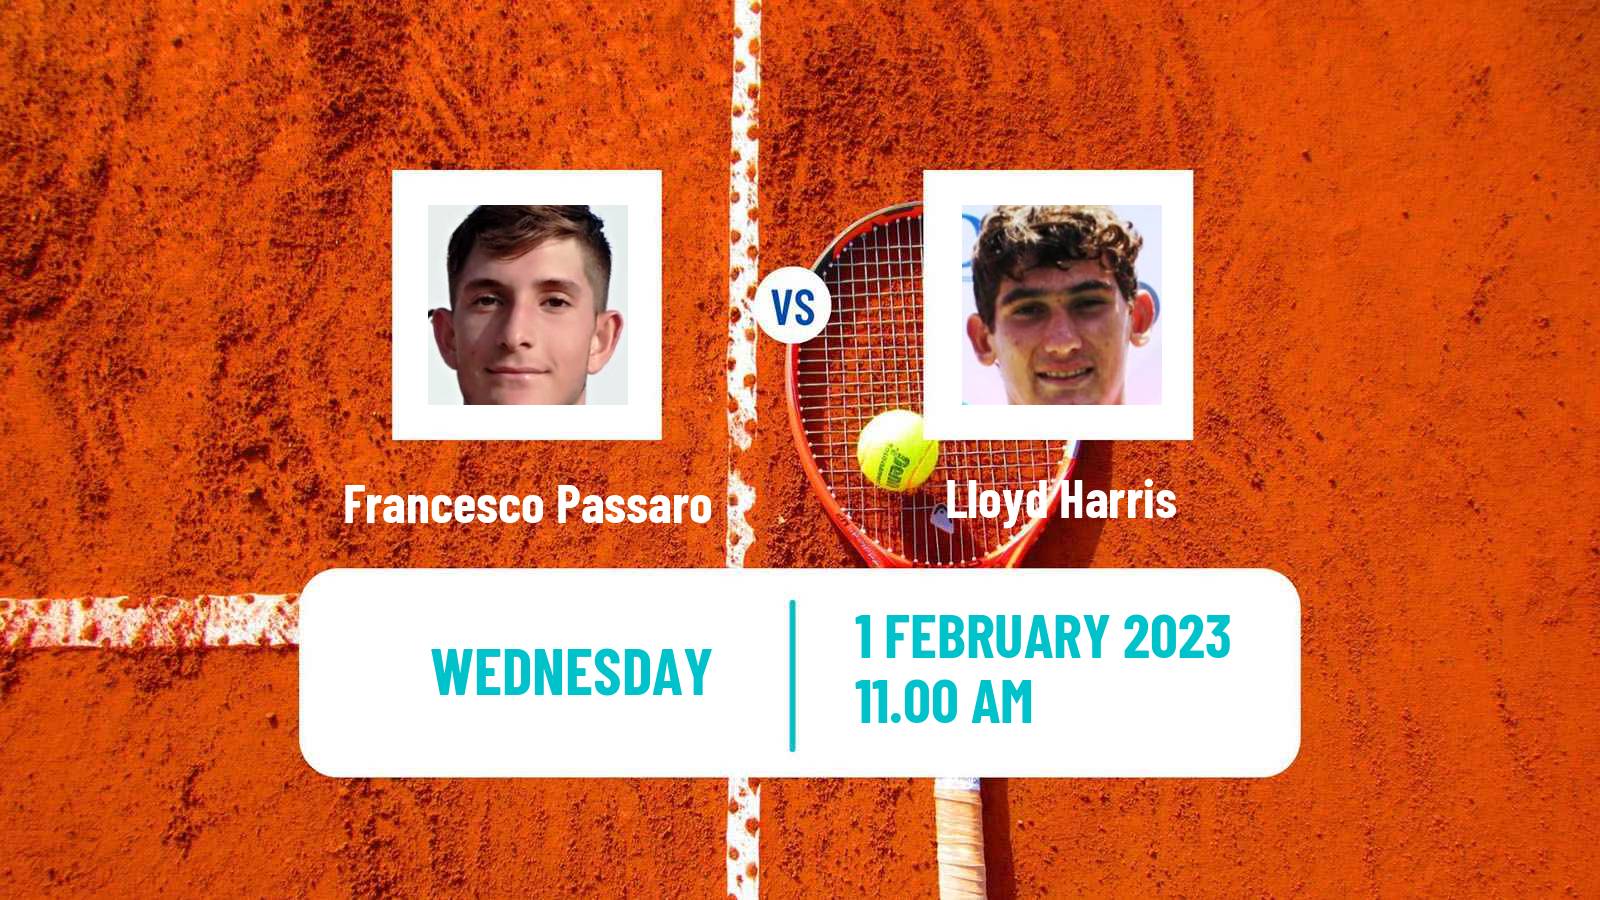 Tennis ATP Challenger Francesco Passaro - Lloyd Harris